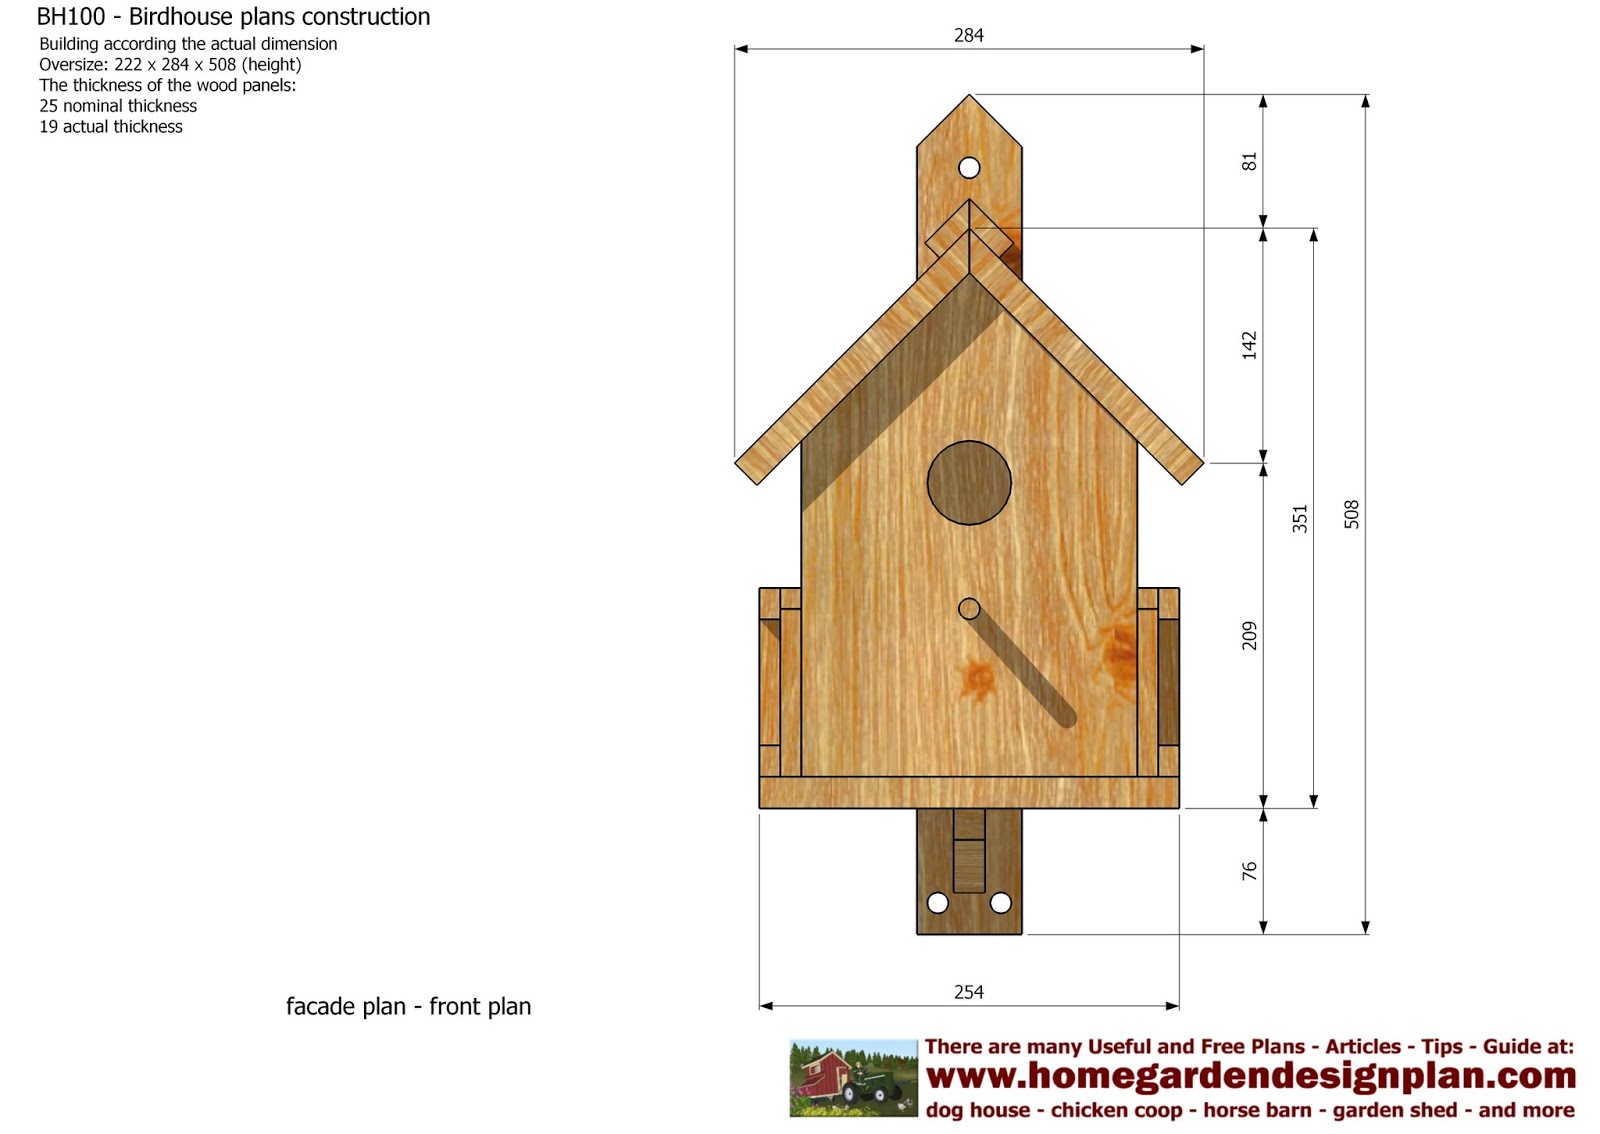  Bird House Plans Construction - Bird House Design - How To Build A